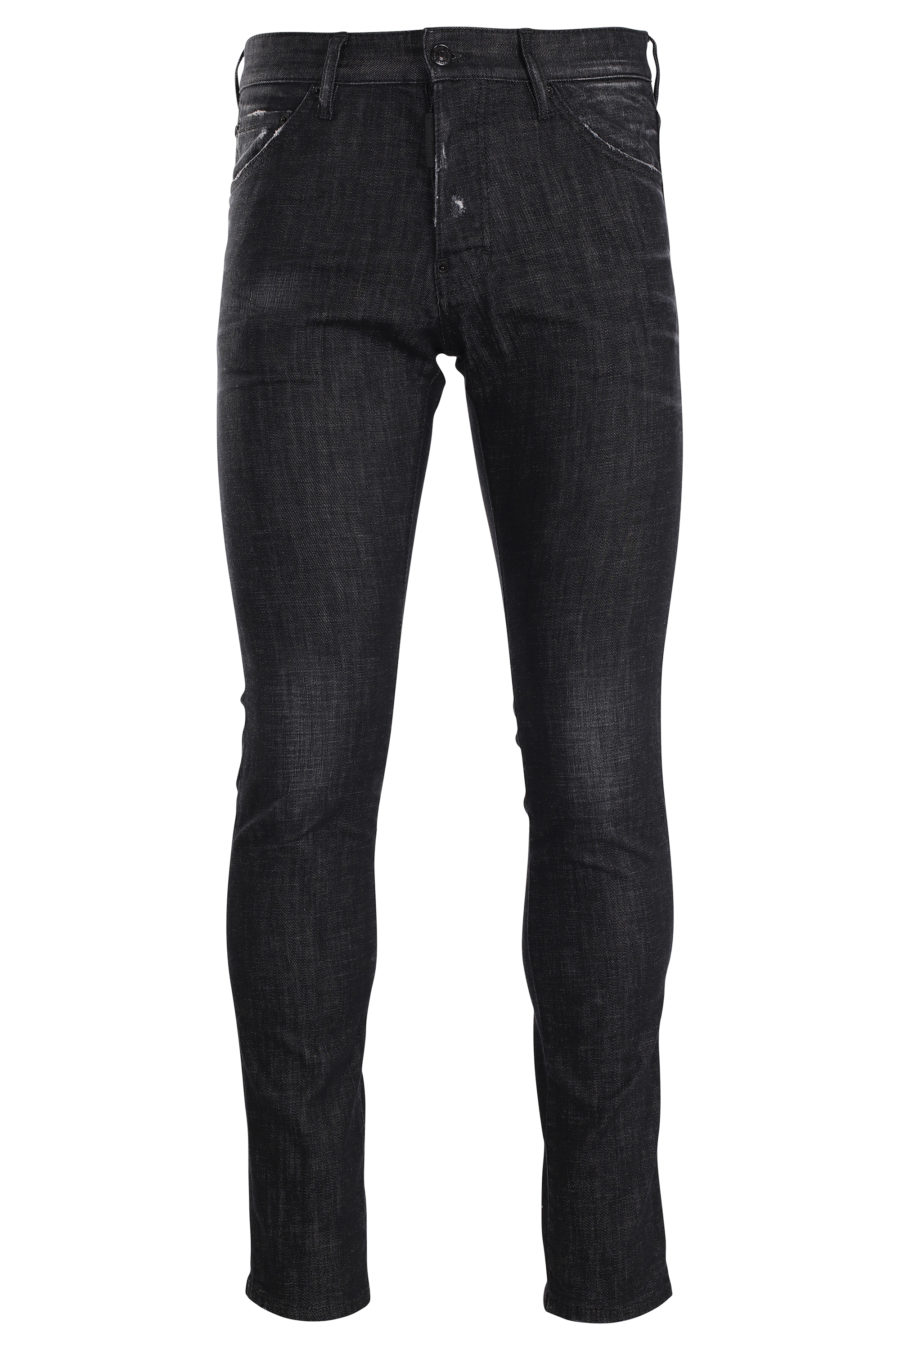 Jeans "ibra cool guy" schwarz - IMG 9979